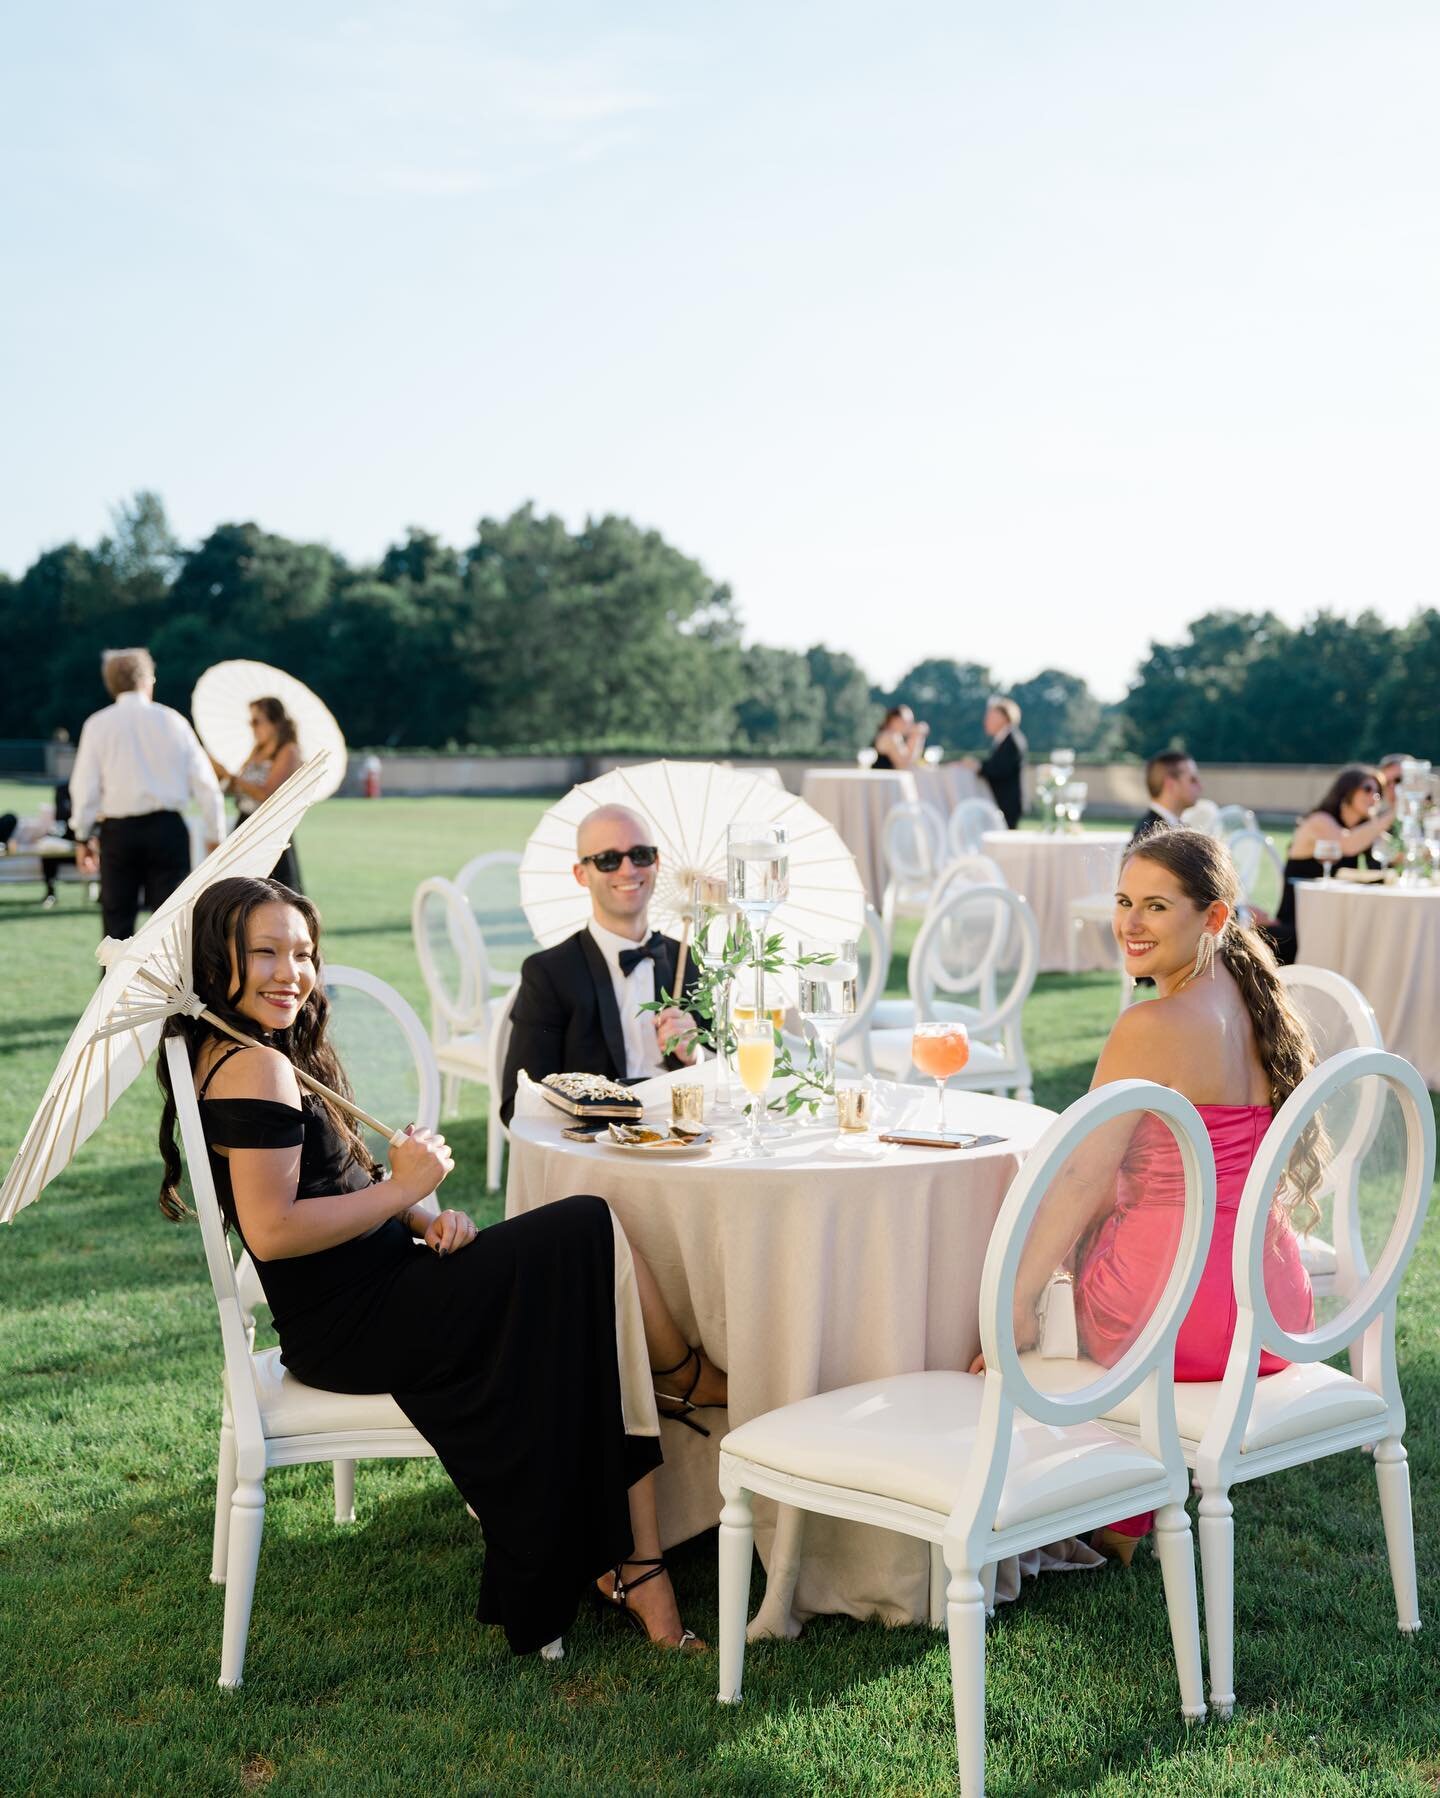 Cocktail hour is everyone&rsquo;s favorite part ☀️🕶🍸
#weddings #outdoorwedding #karynmichaelevents #ohekacastlewedding #ohekacastle #oheka #destinationwedding #castlewedding #eventplanner #eventdesign #luxurylifestyle #luxeweddings